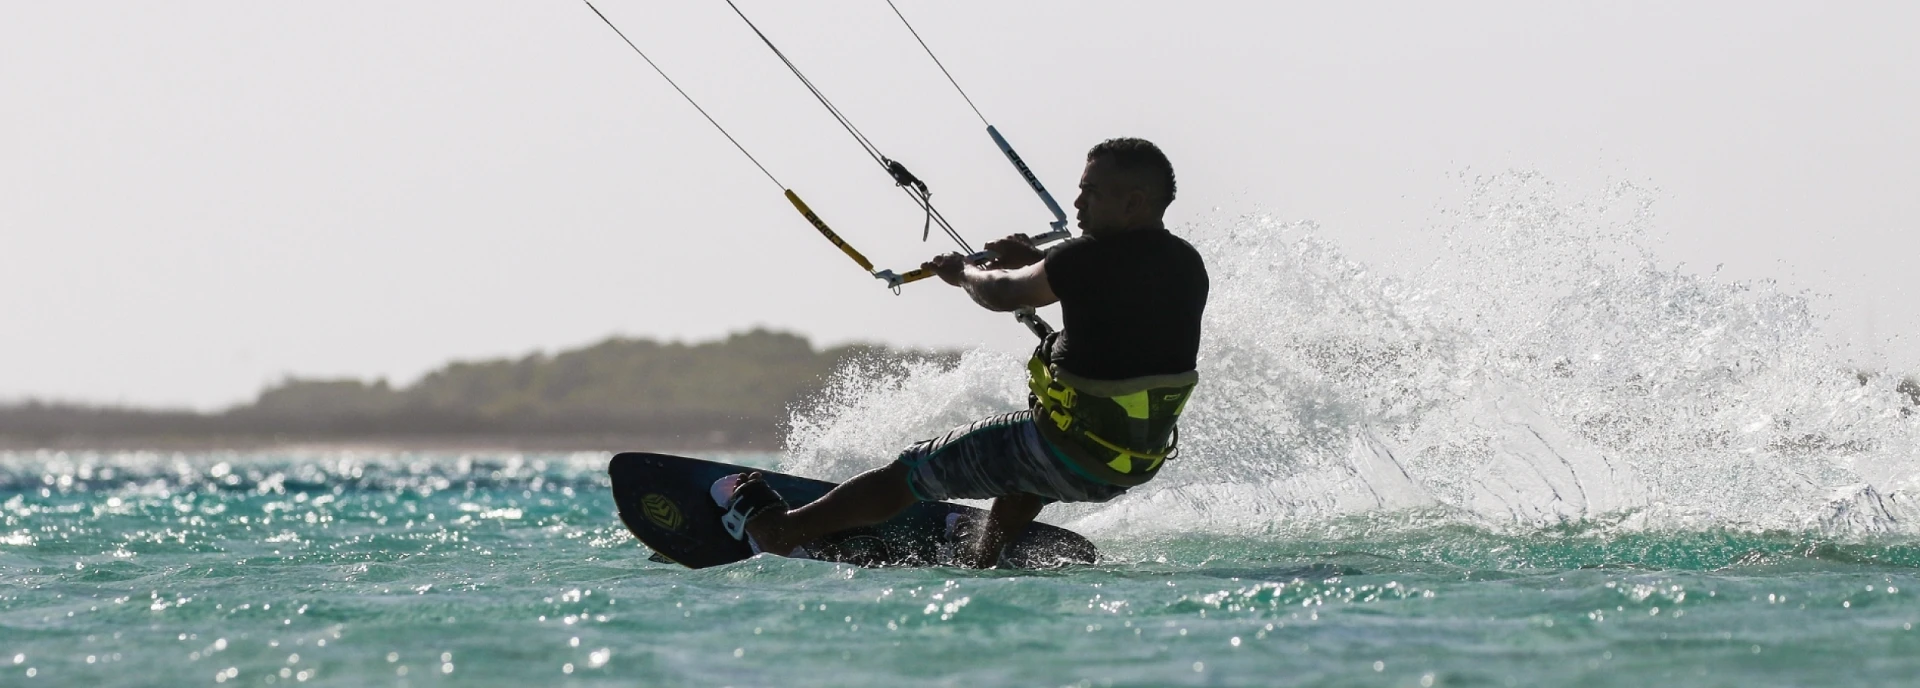 Kitesurfing: aprovechando la brisa del Caribe